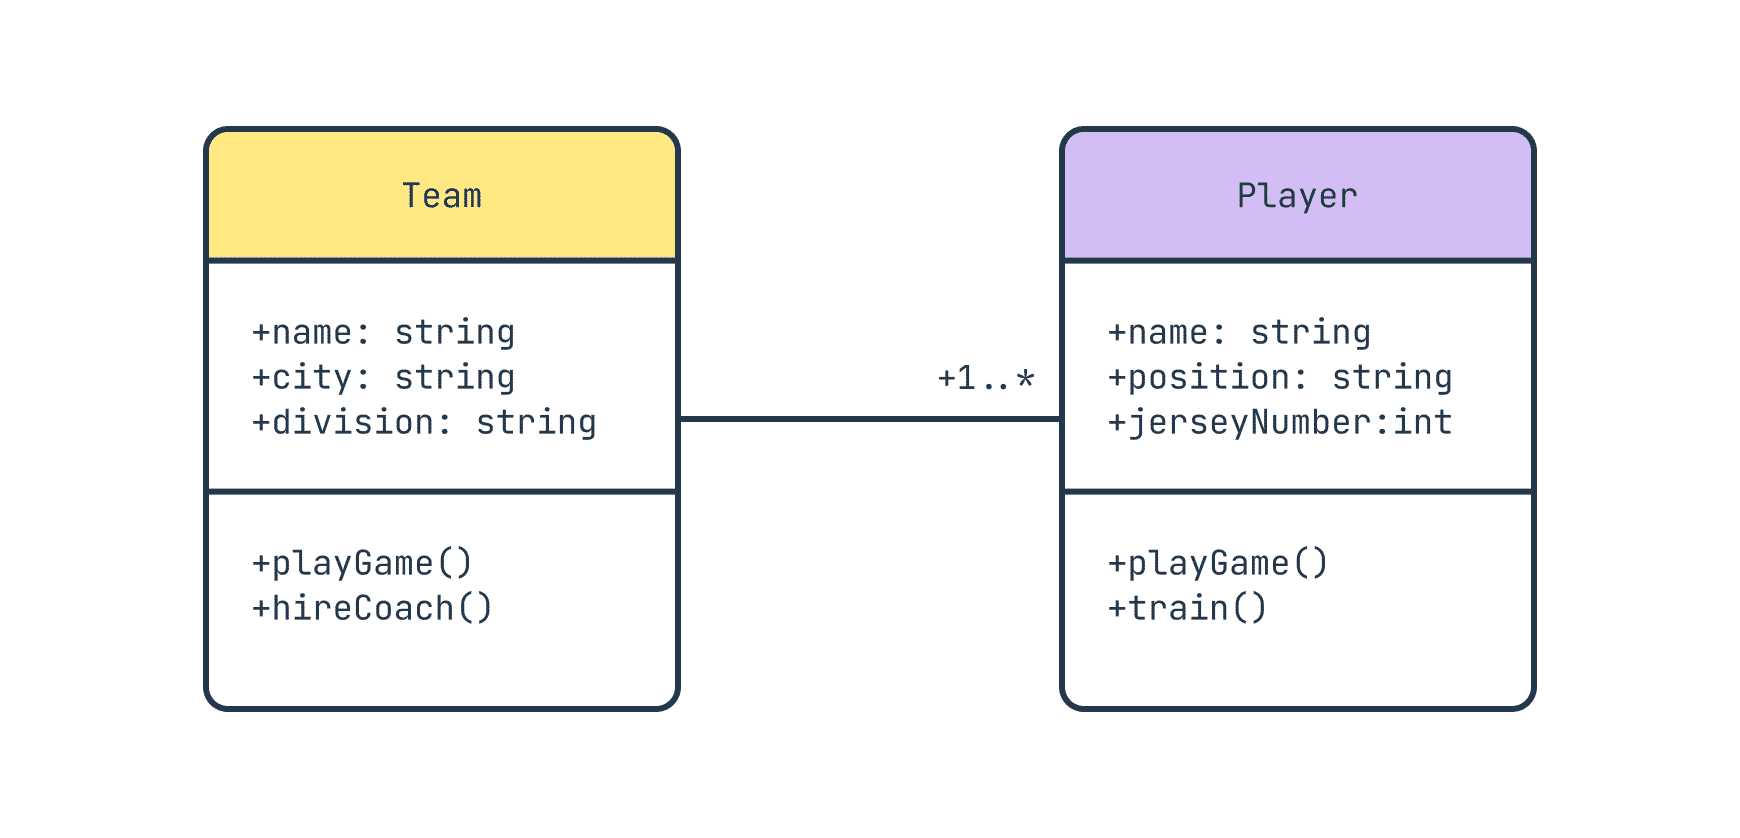 Multiplicity notation in a UML class diagram